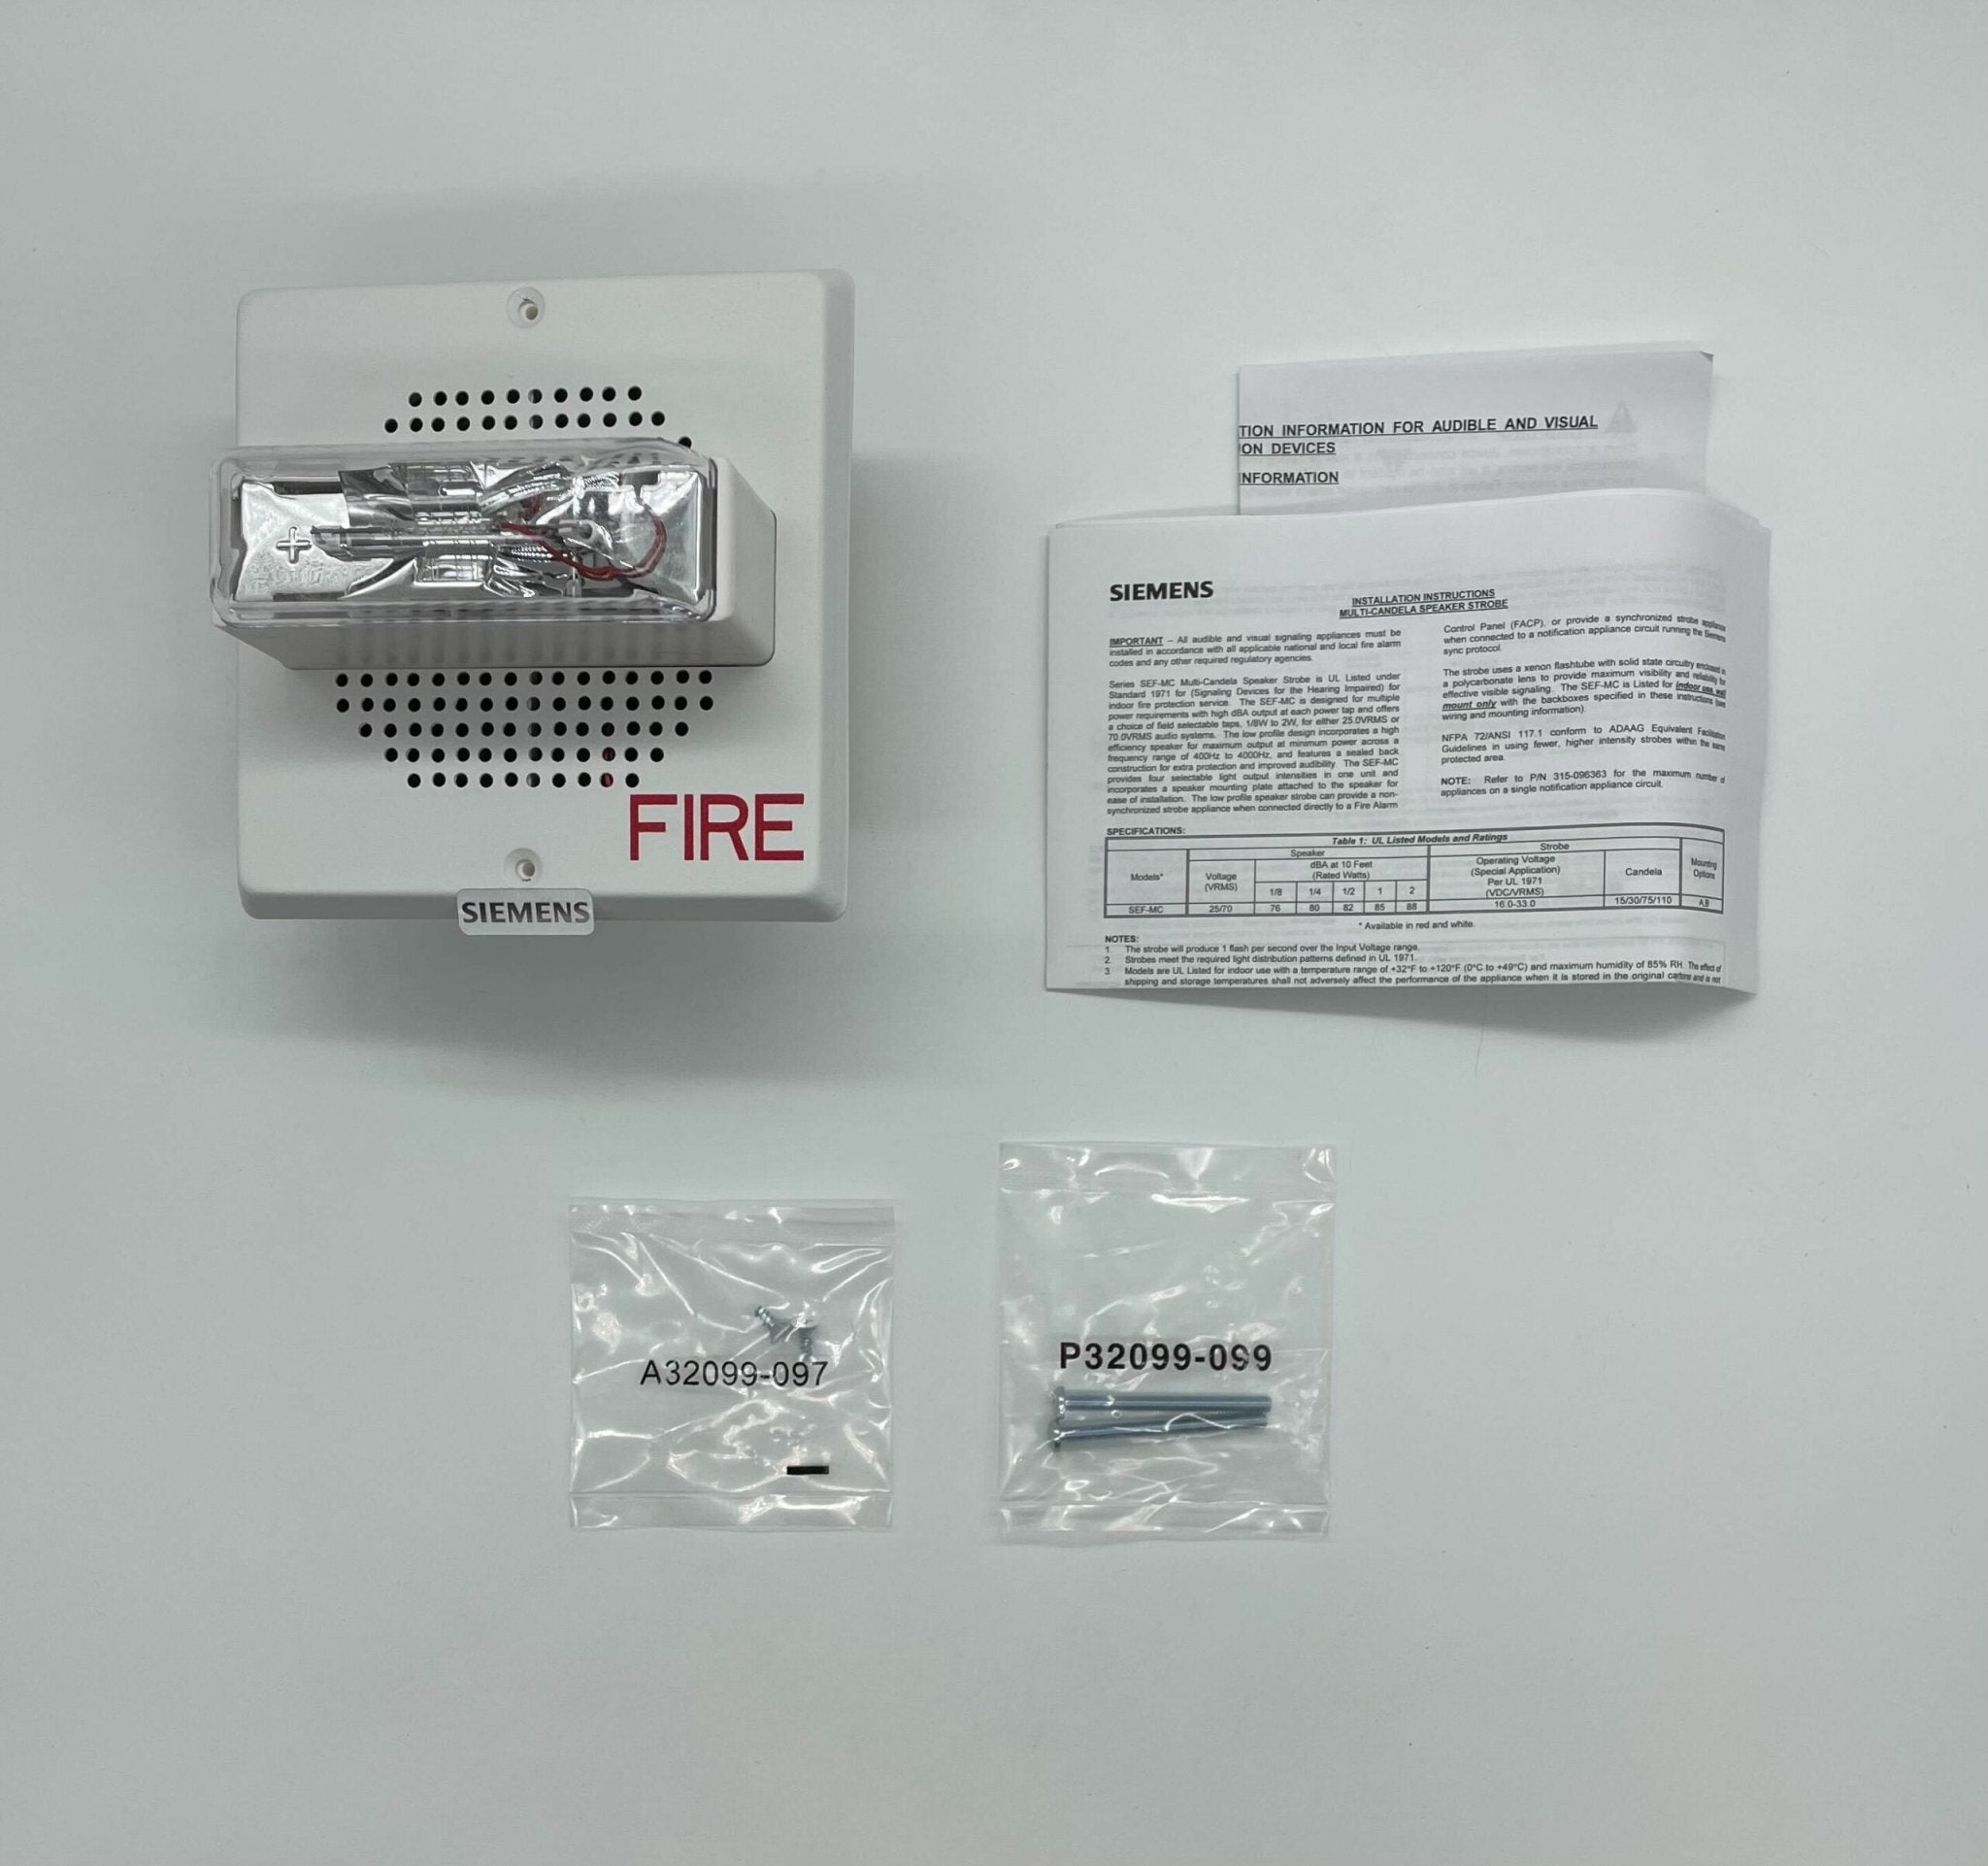 Siemens SEF-MC-W Speaker Strobe - The Fire Alarm Supplier